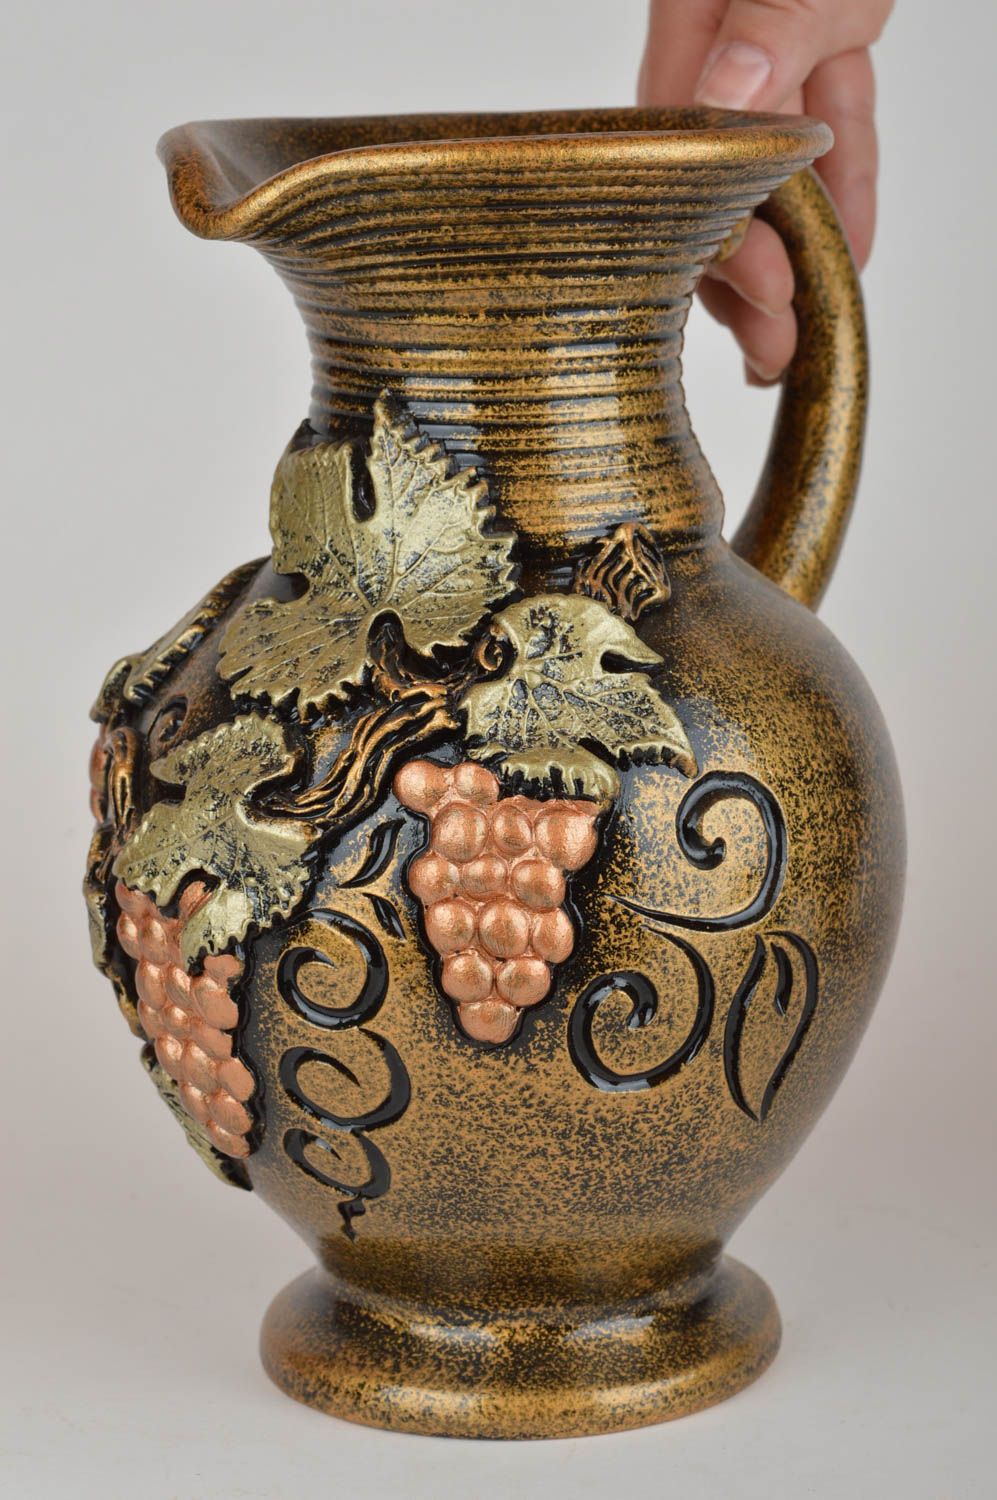 60 oz ceramic handmade wine pitcher with handle and molded grape design 2,9 lb photo 3